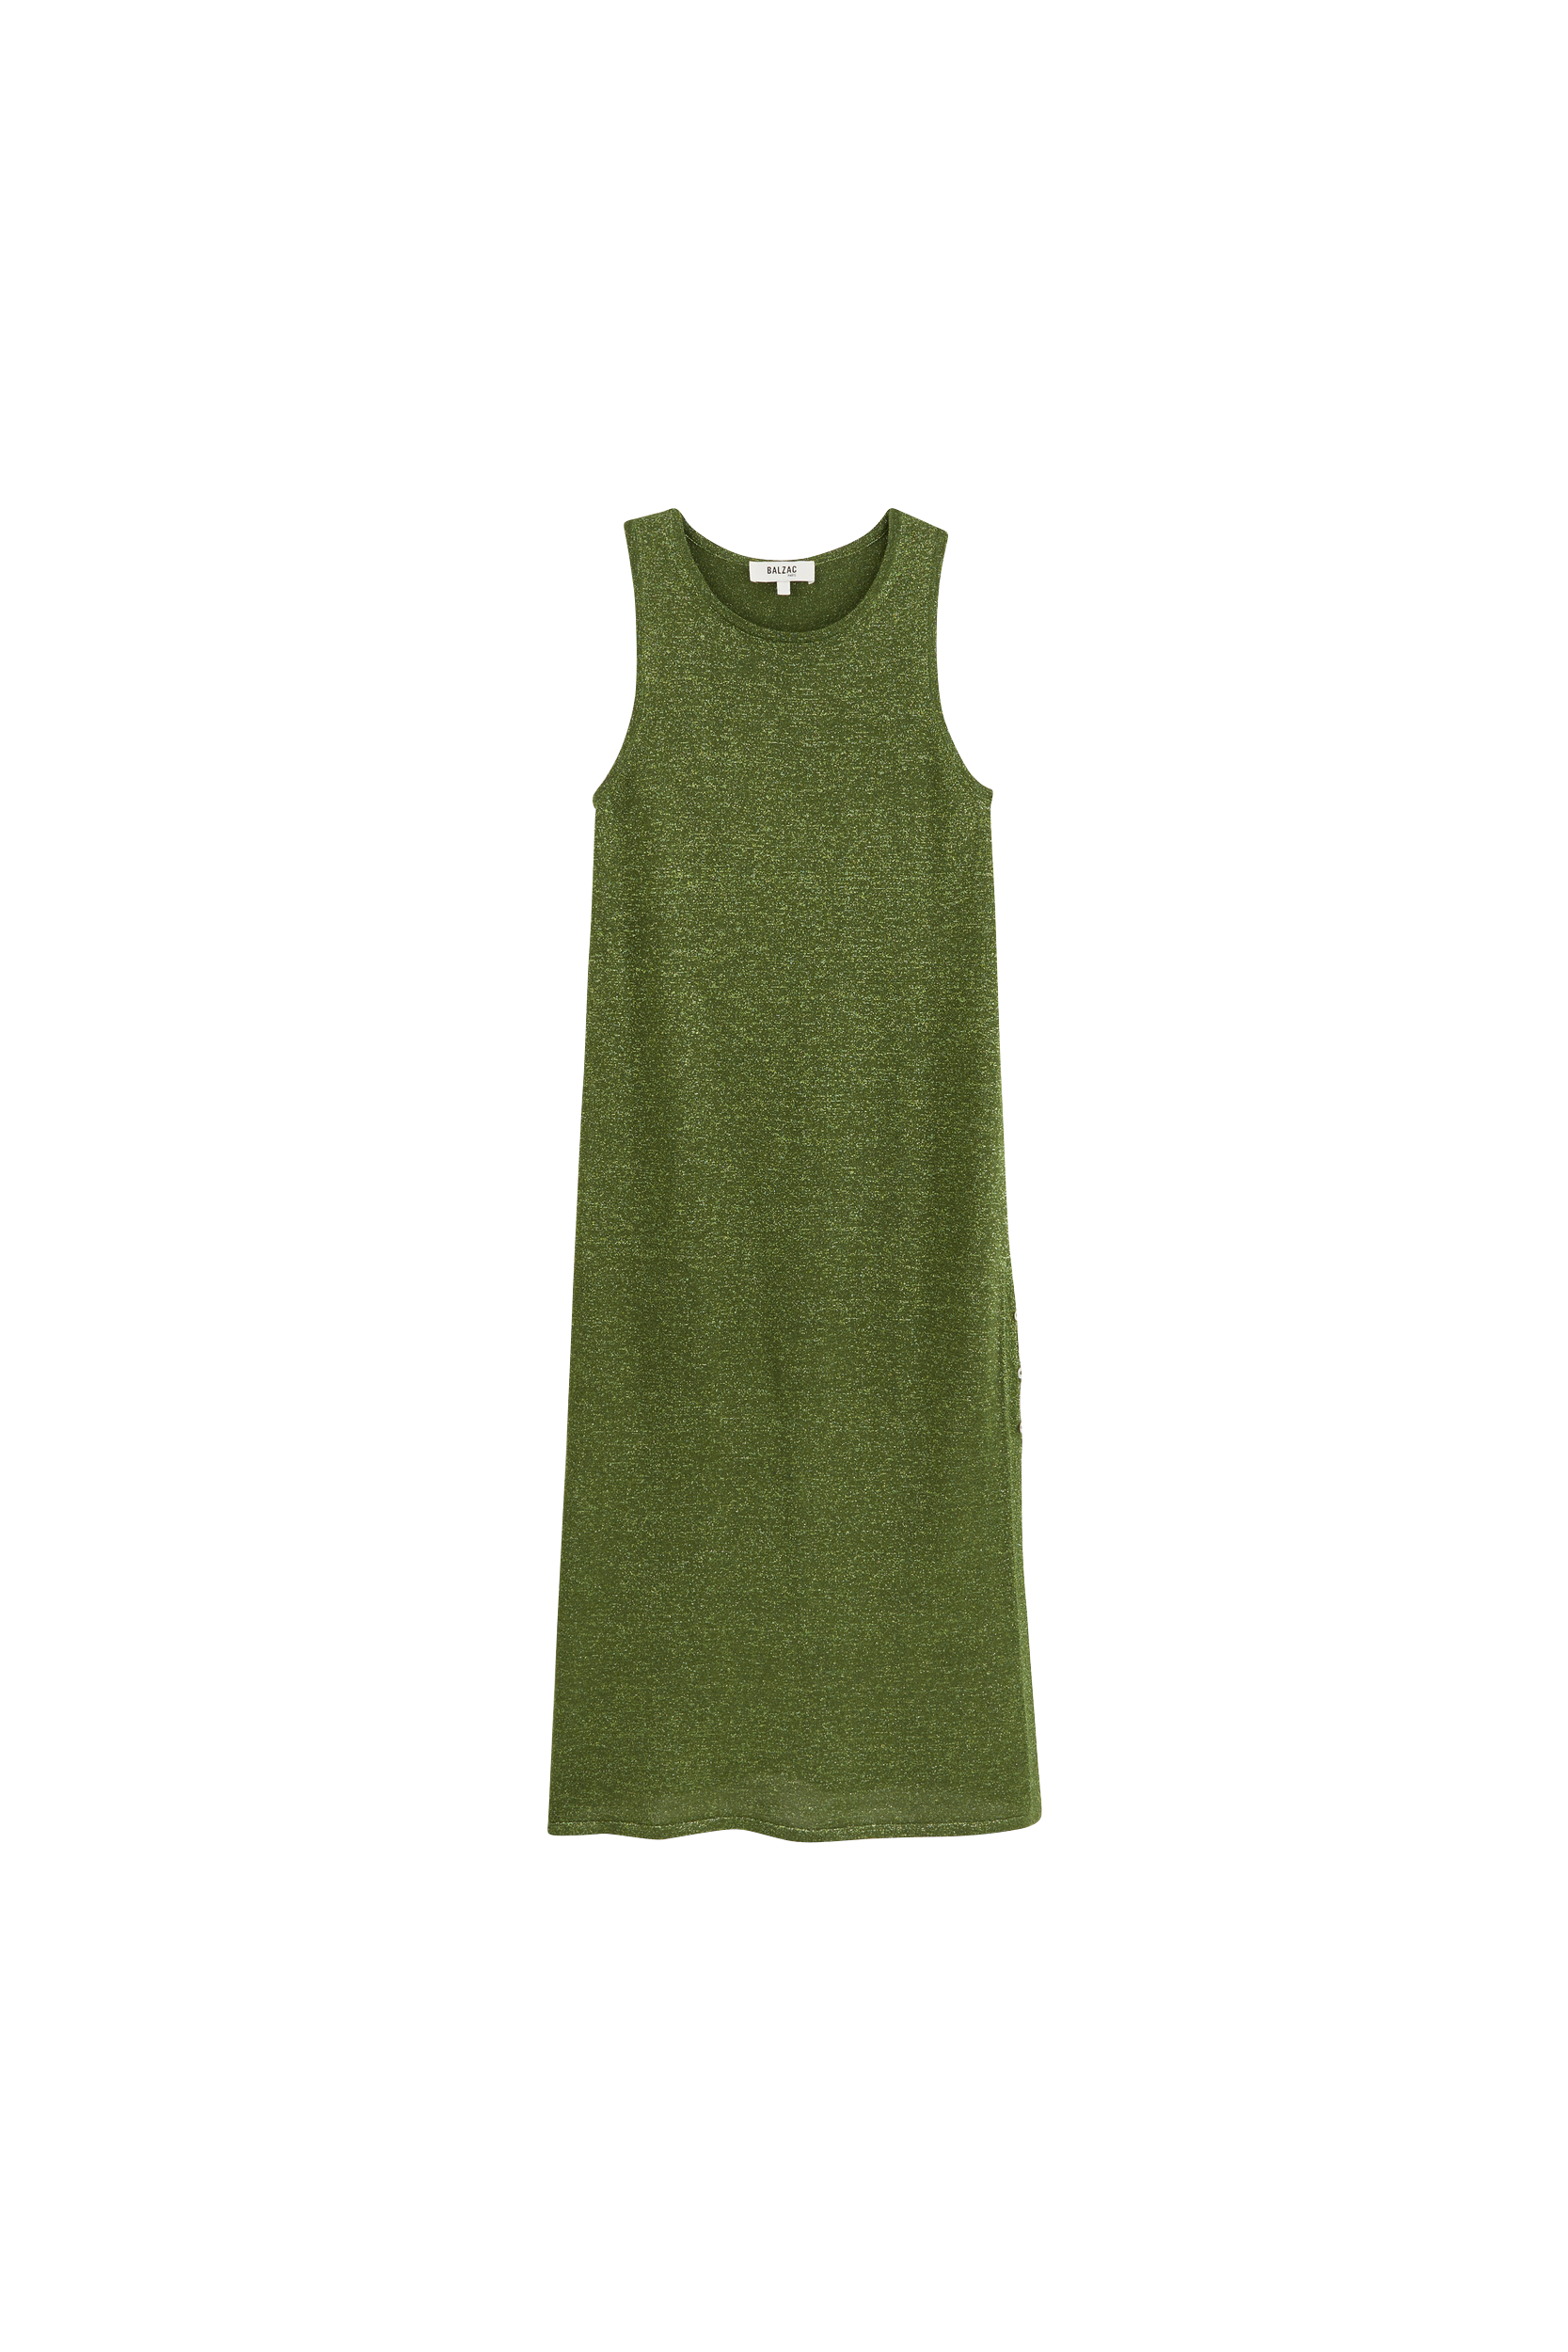 Forest green Persil dress